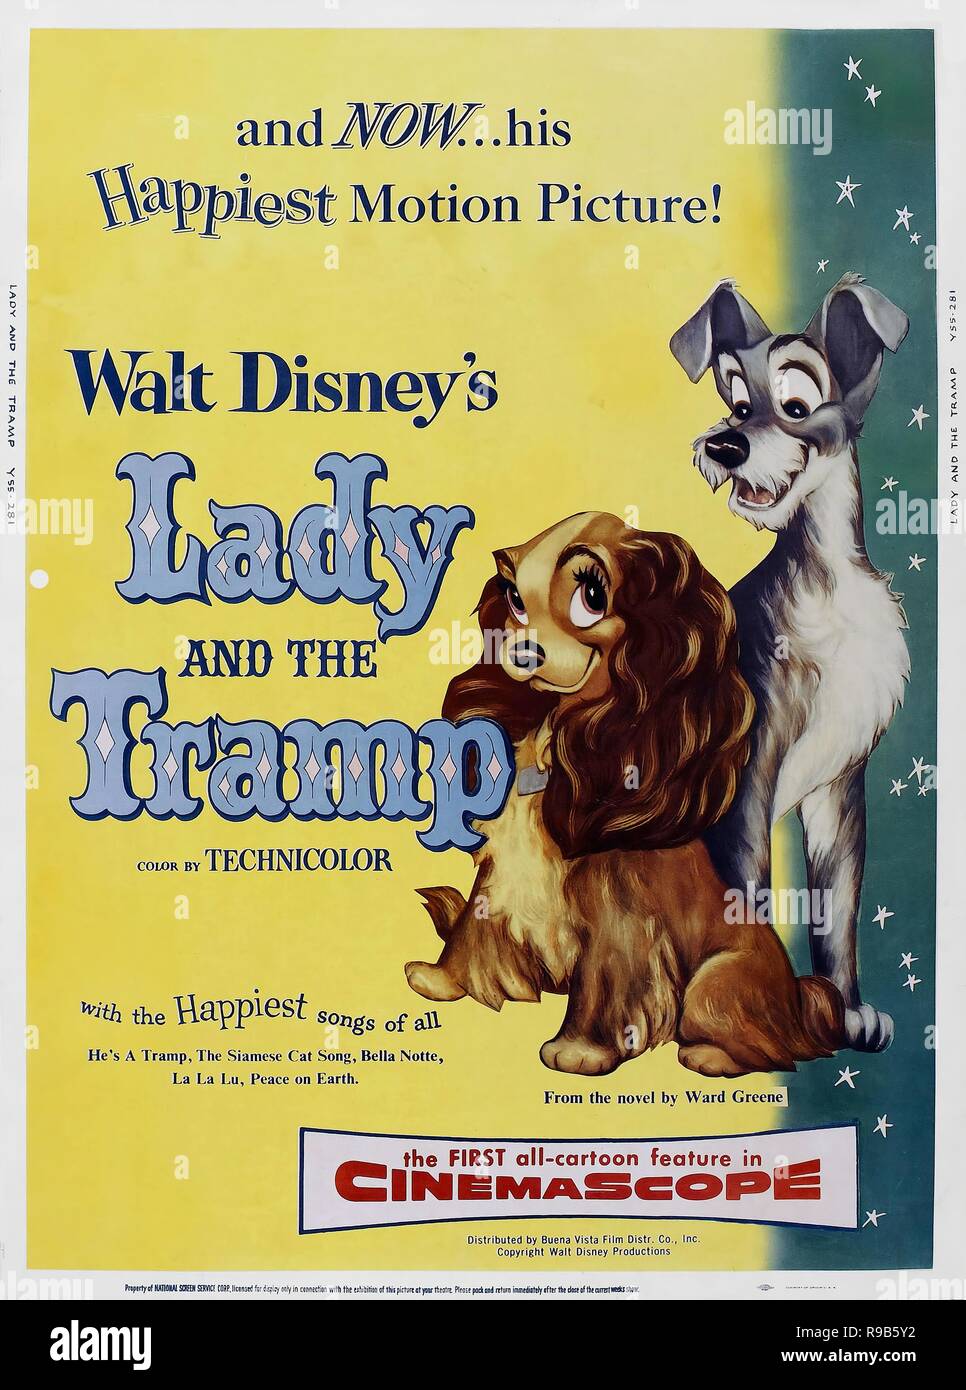 Original film title: THE LADY AND THE TRAMP. English title: THE LADY AND THE TRAMP. Year: 1955. Director: CLYDE GERONIMI; WILFRED JACKSON; HAMILTON LUSKE. Credit: WALT DISNEY PRODUCTIONS / Album Stock Photo